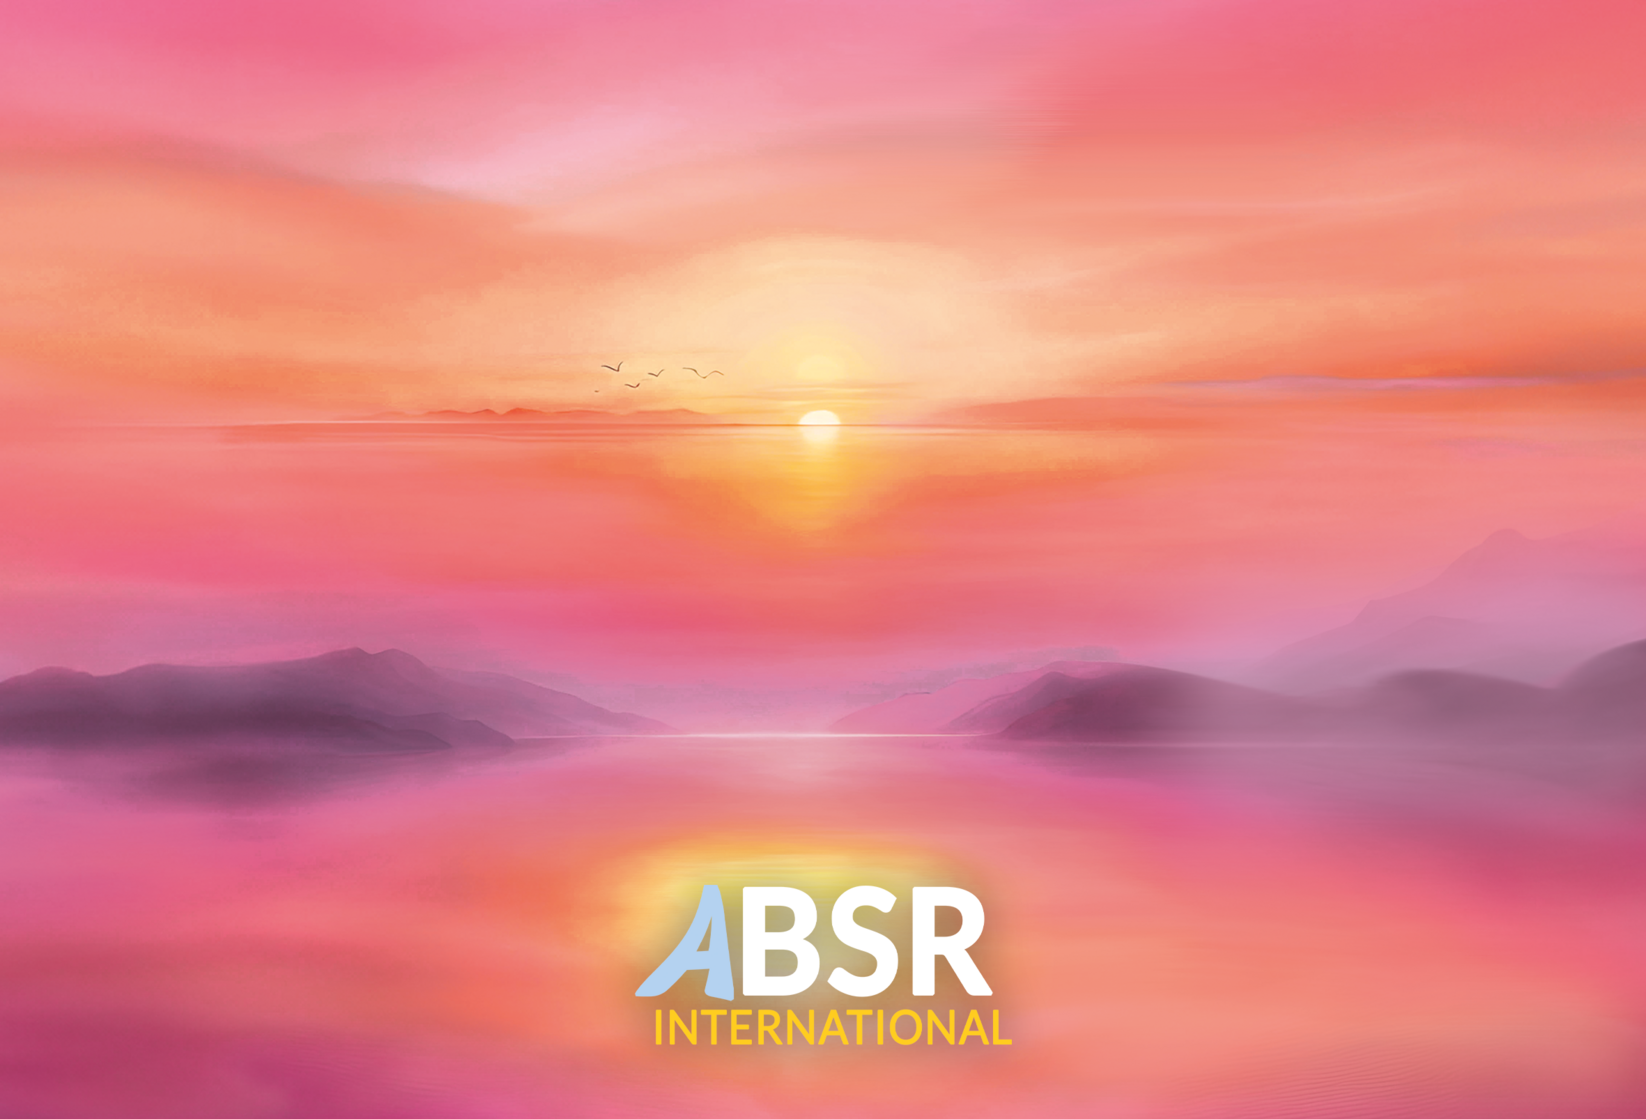 ABSR International broad no text